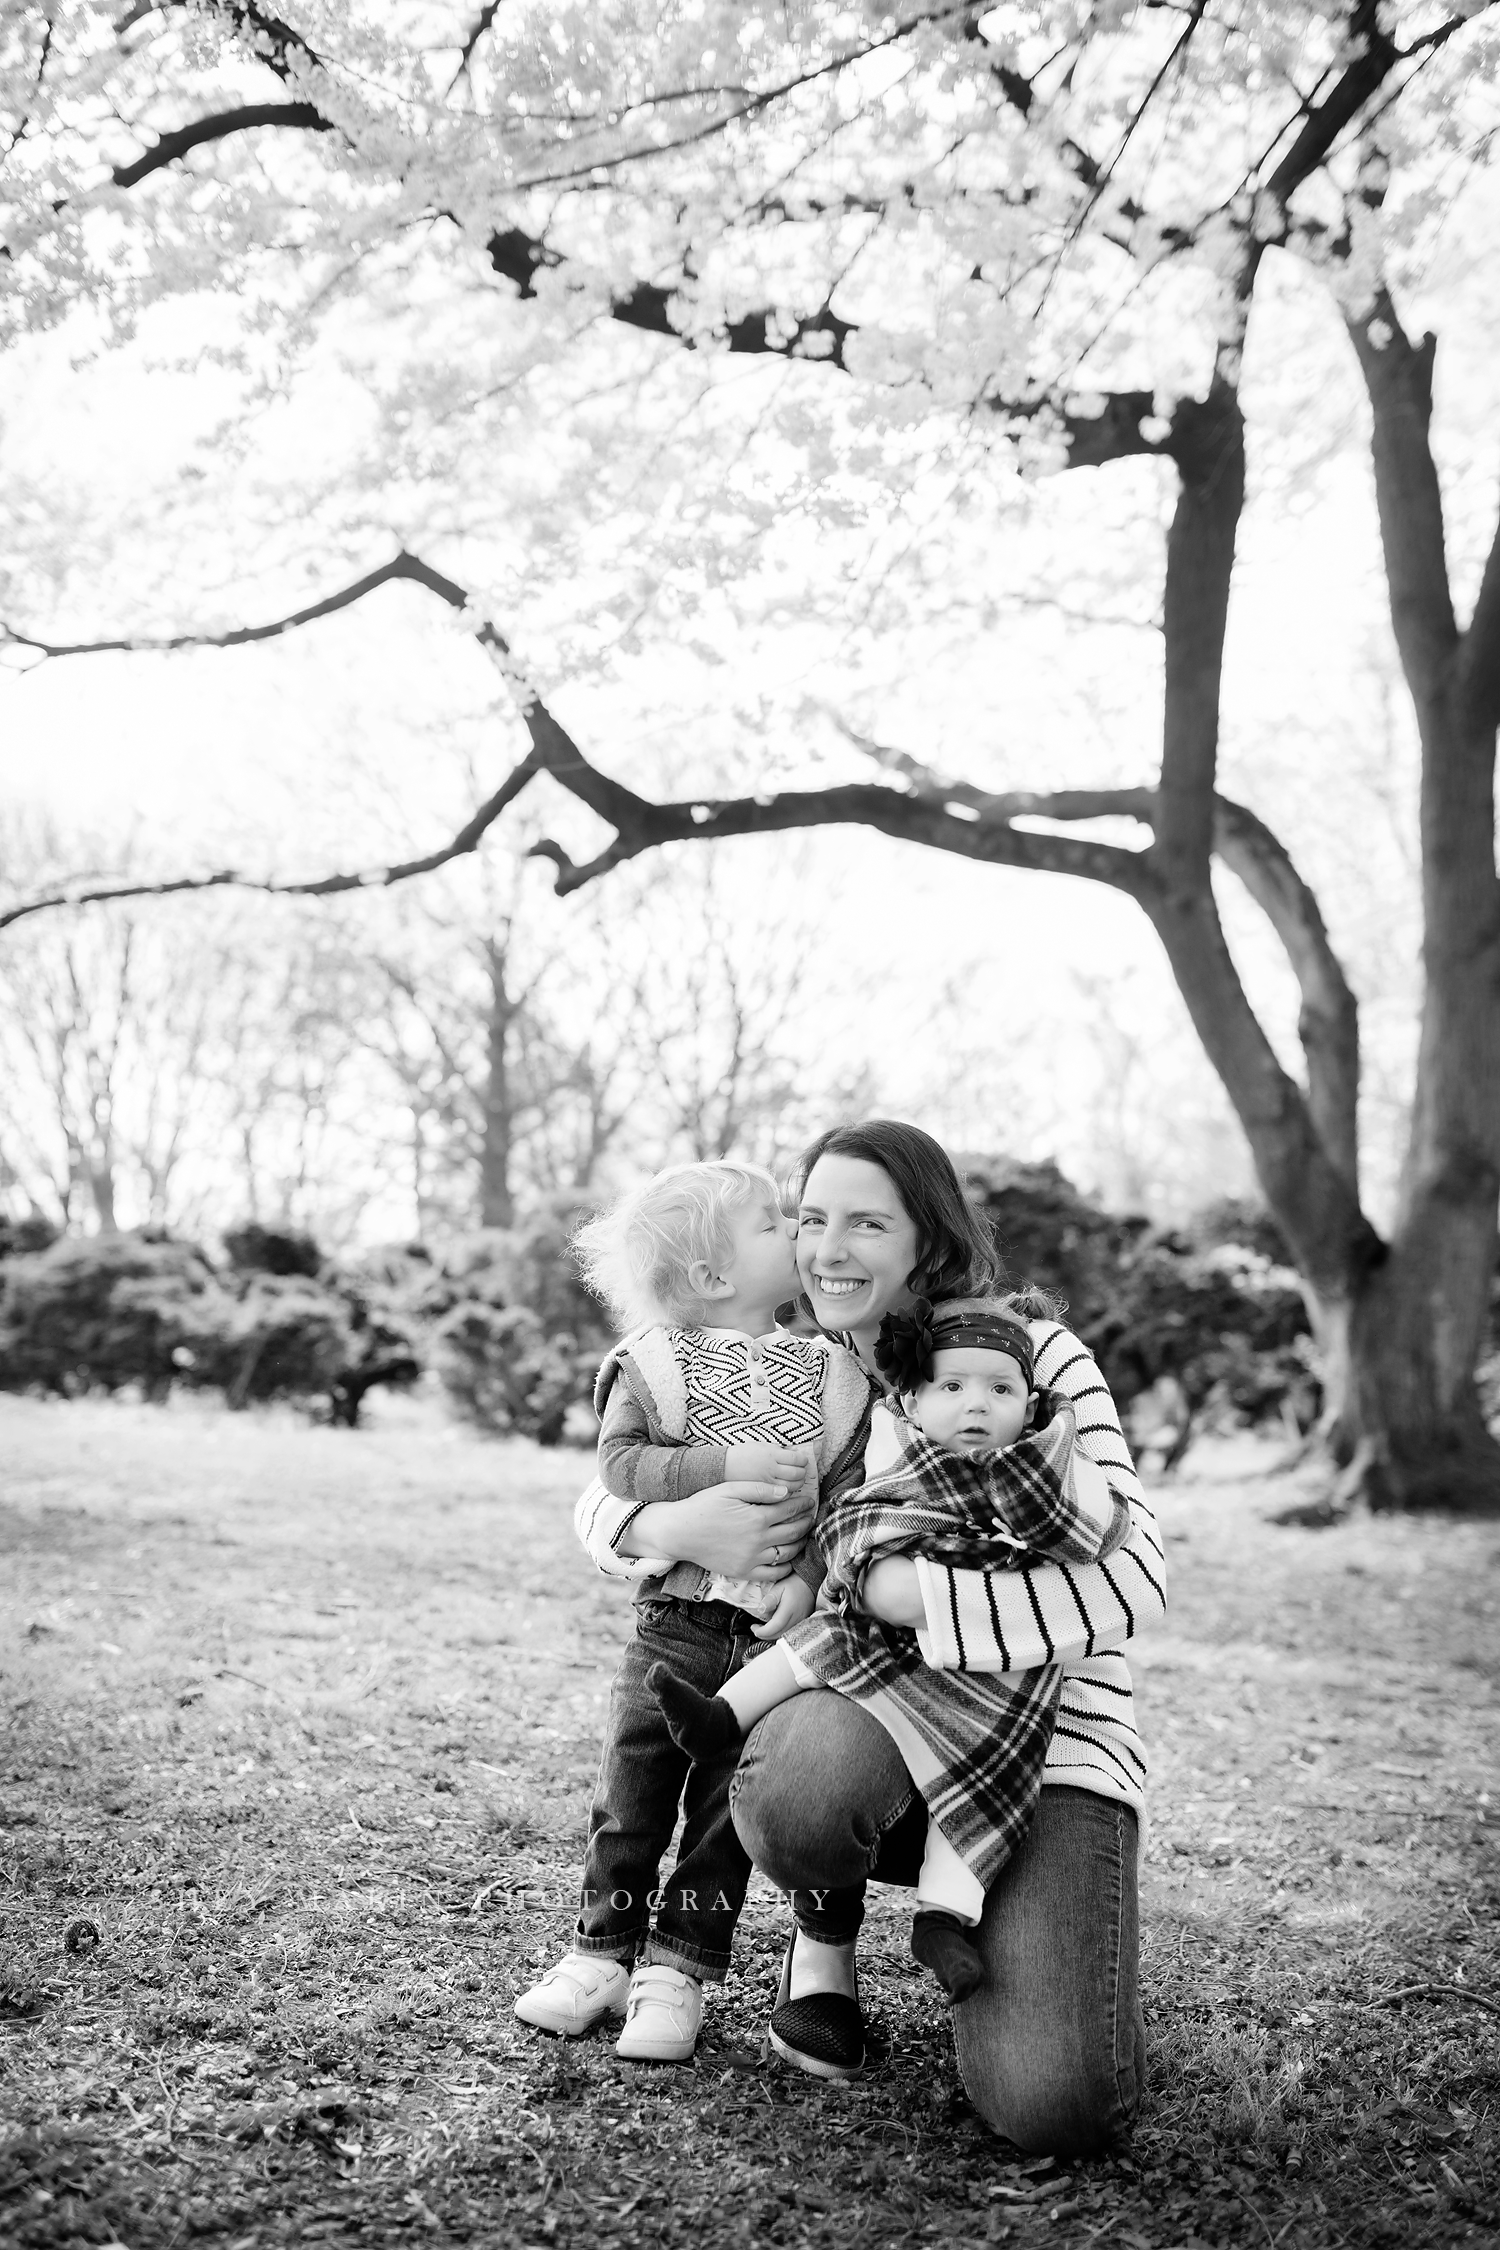 weeping cherries washington DC family photographer